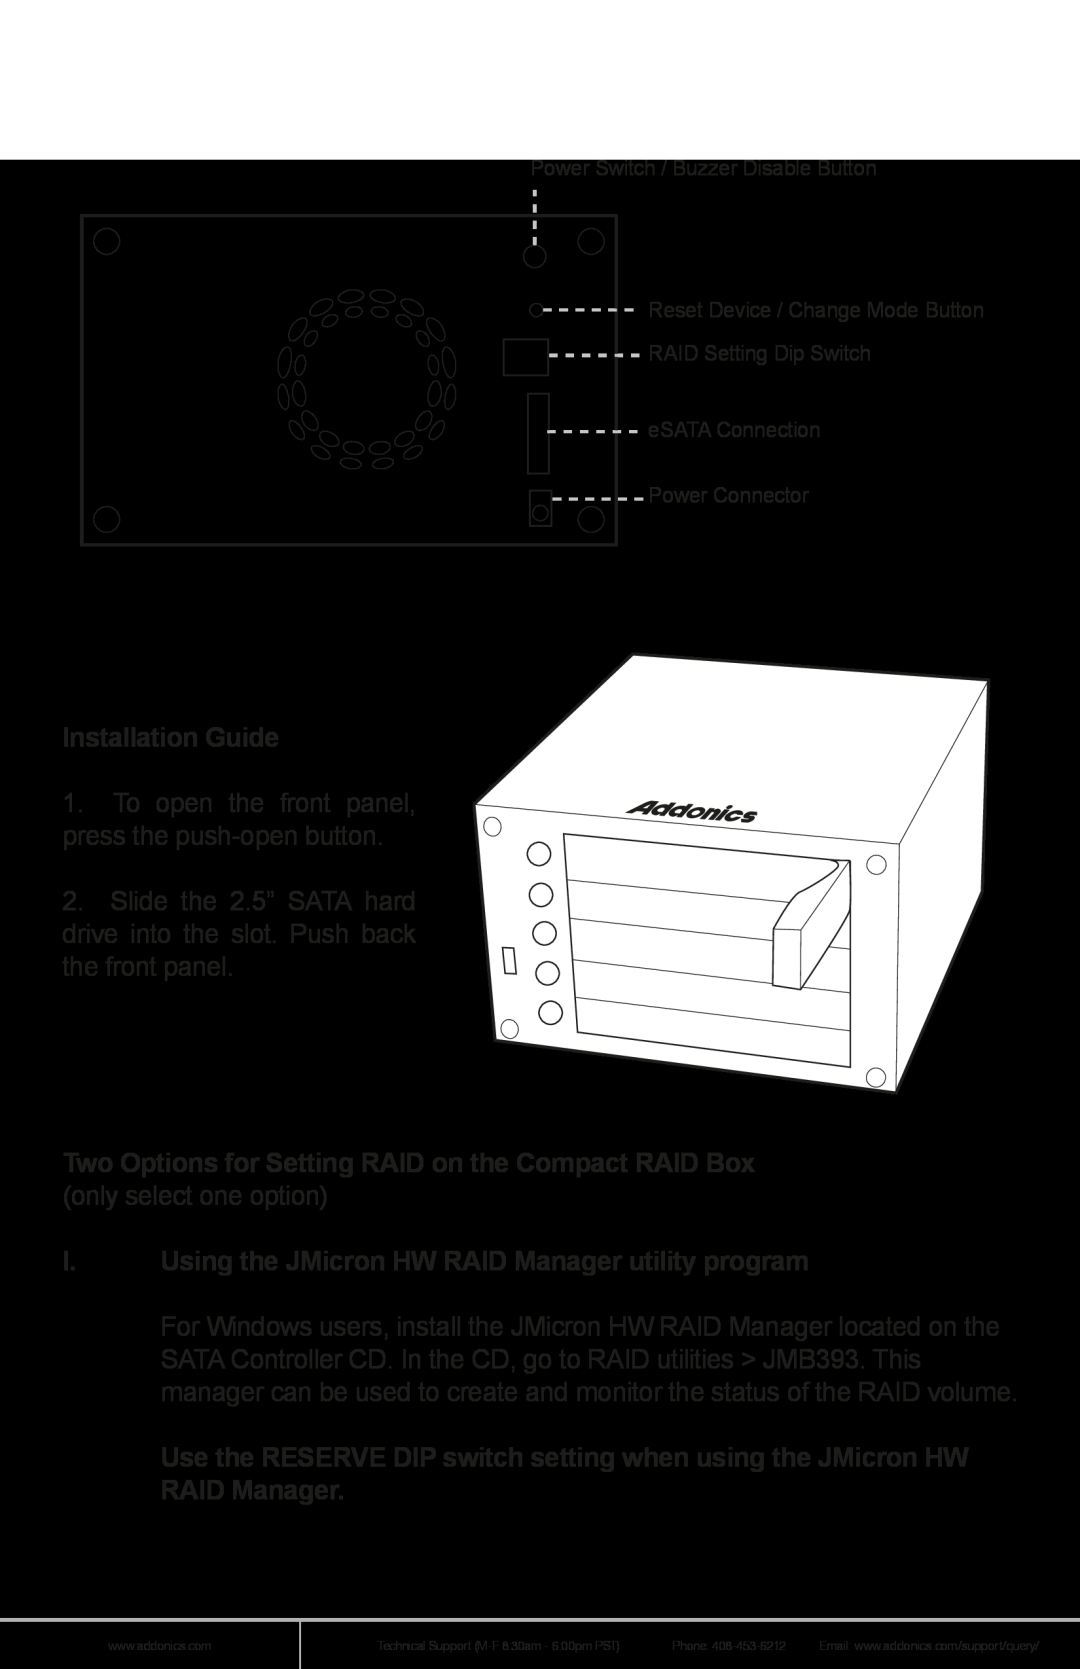 Addonics Technologies CPR5SA manual Installation Guide, I. Using the JMicron HW RAID Manager utility program 